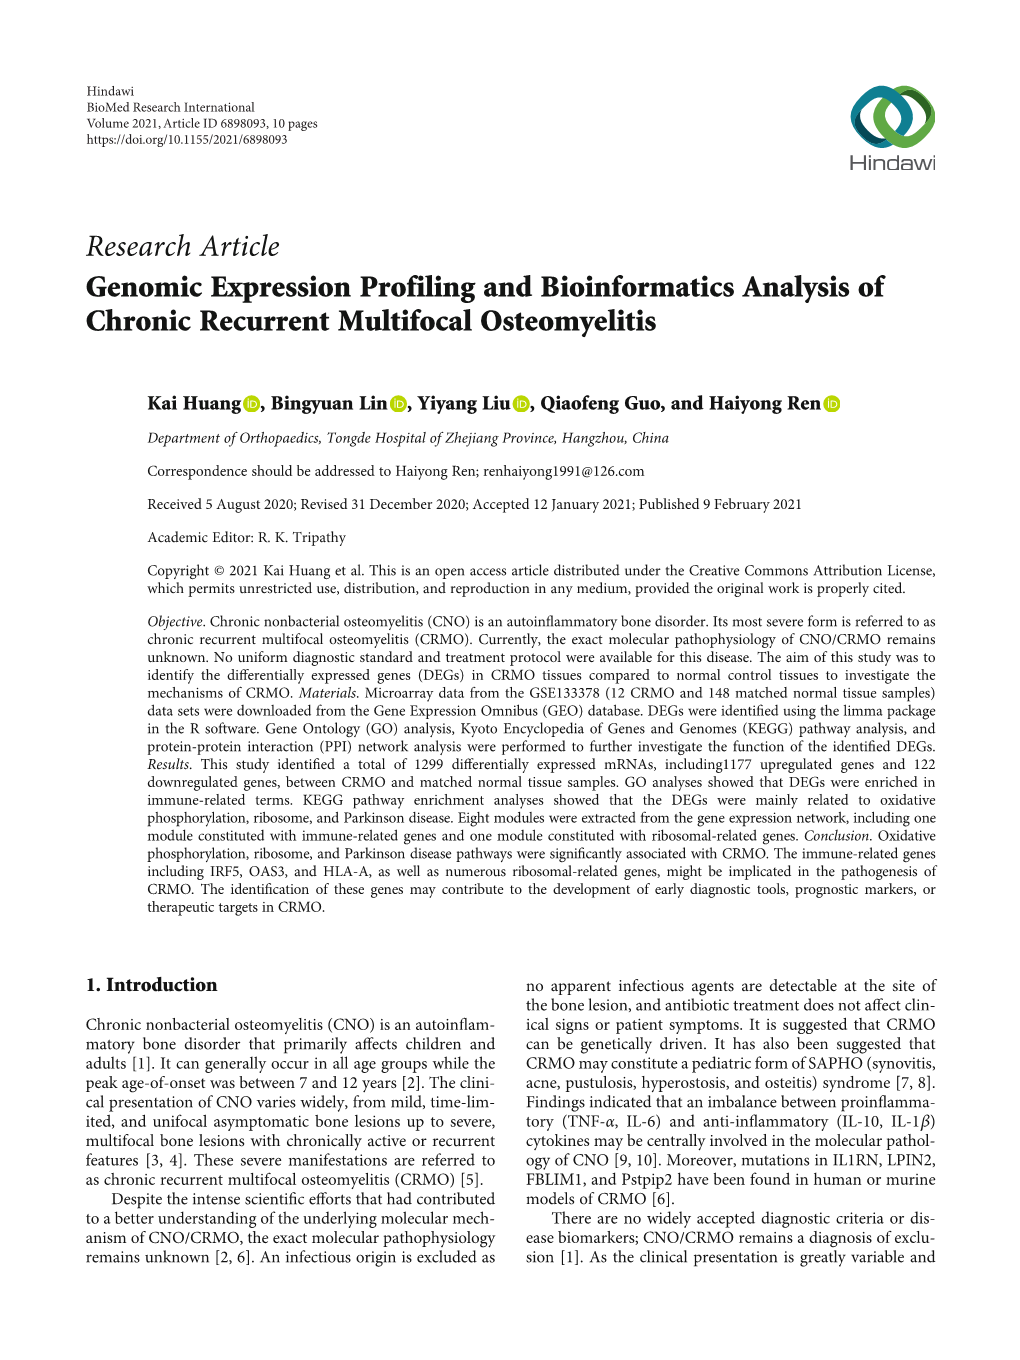 Genomic Expression Profiling and Bioinformatics Analysis of Chronic Recurrent Multifocal Osteomyelitis